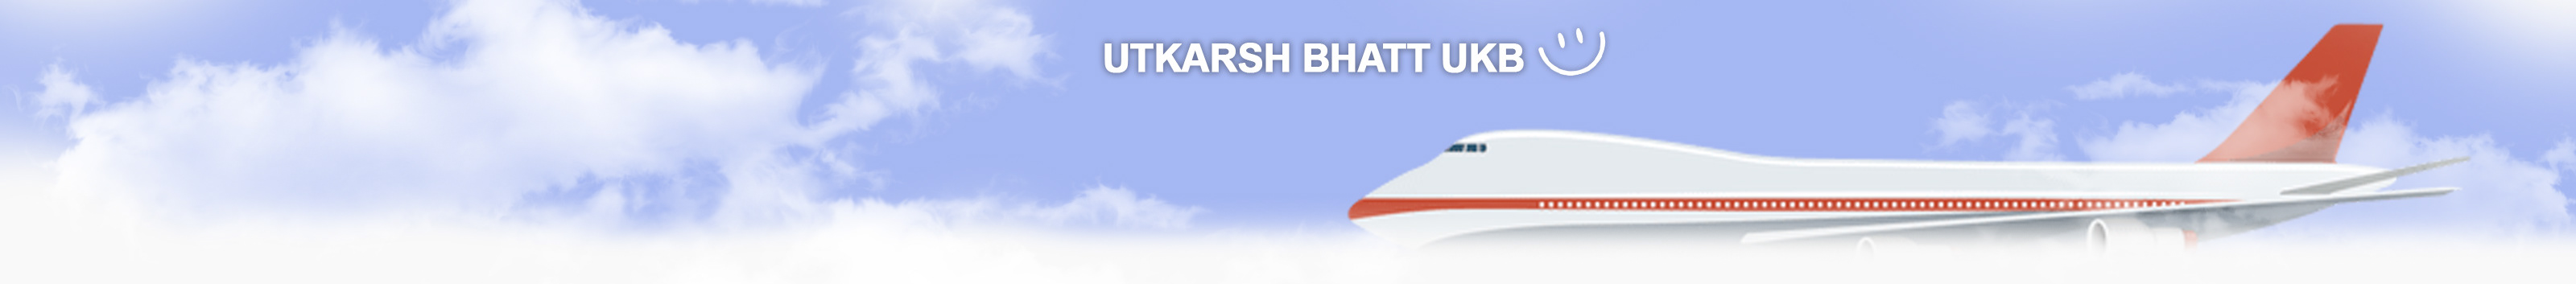 Utkarsh Bhatt UKB's profile banner